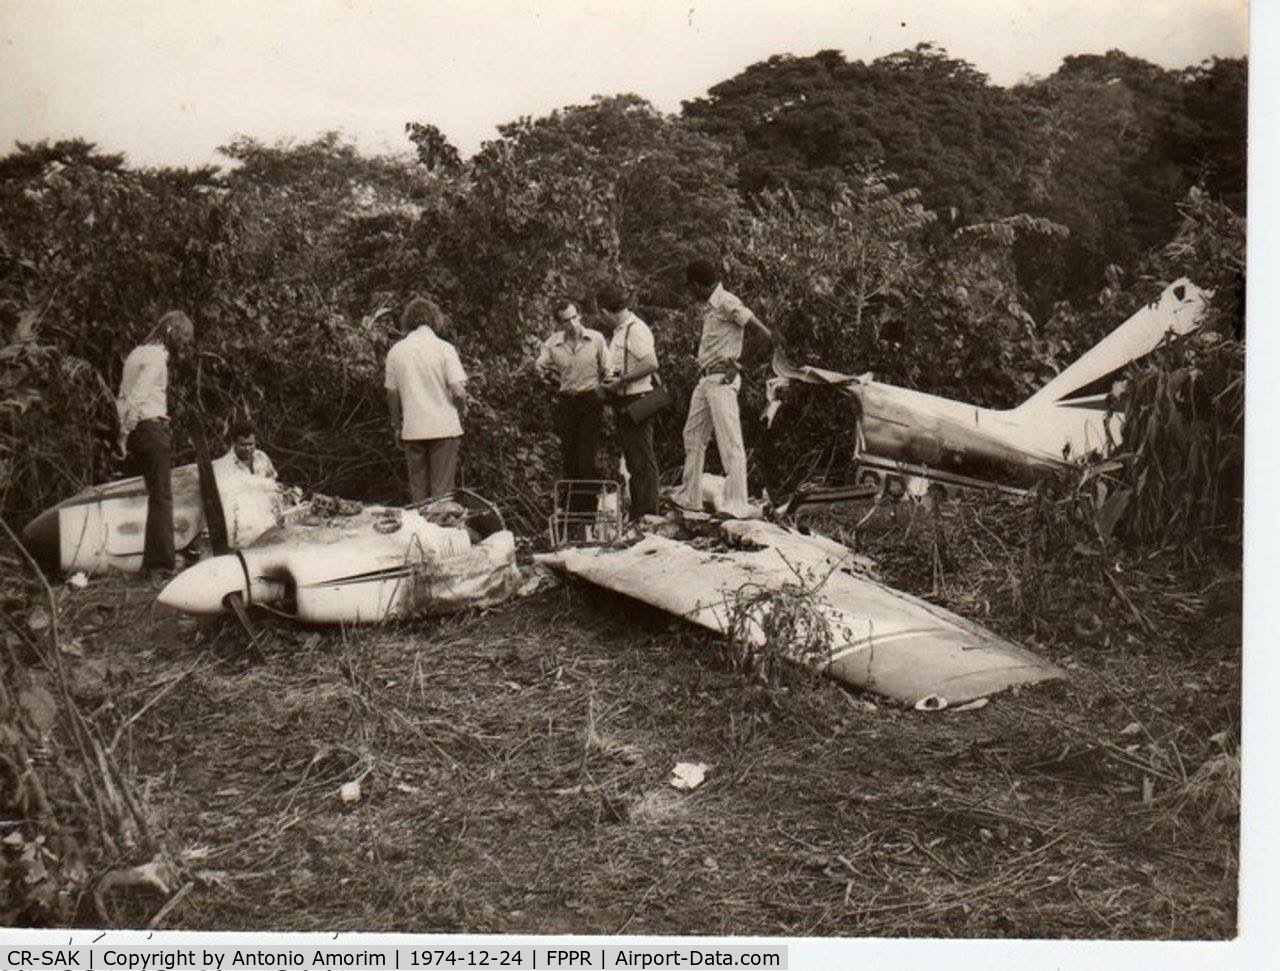 CR-SAK, Piper PA-31 Navajo C/N 31-454, Aircraft crashed FPPR airport 24DEC1974.